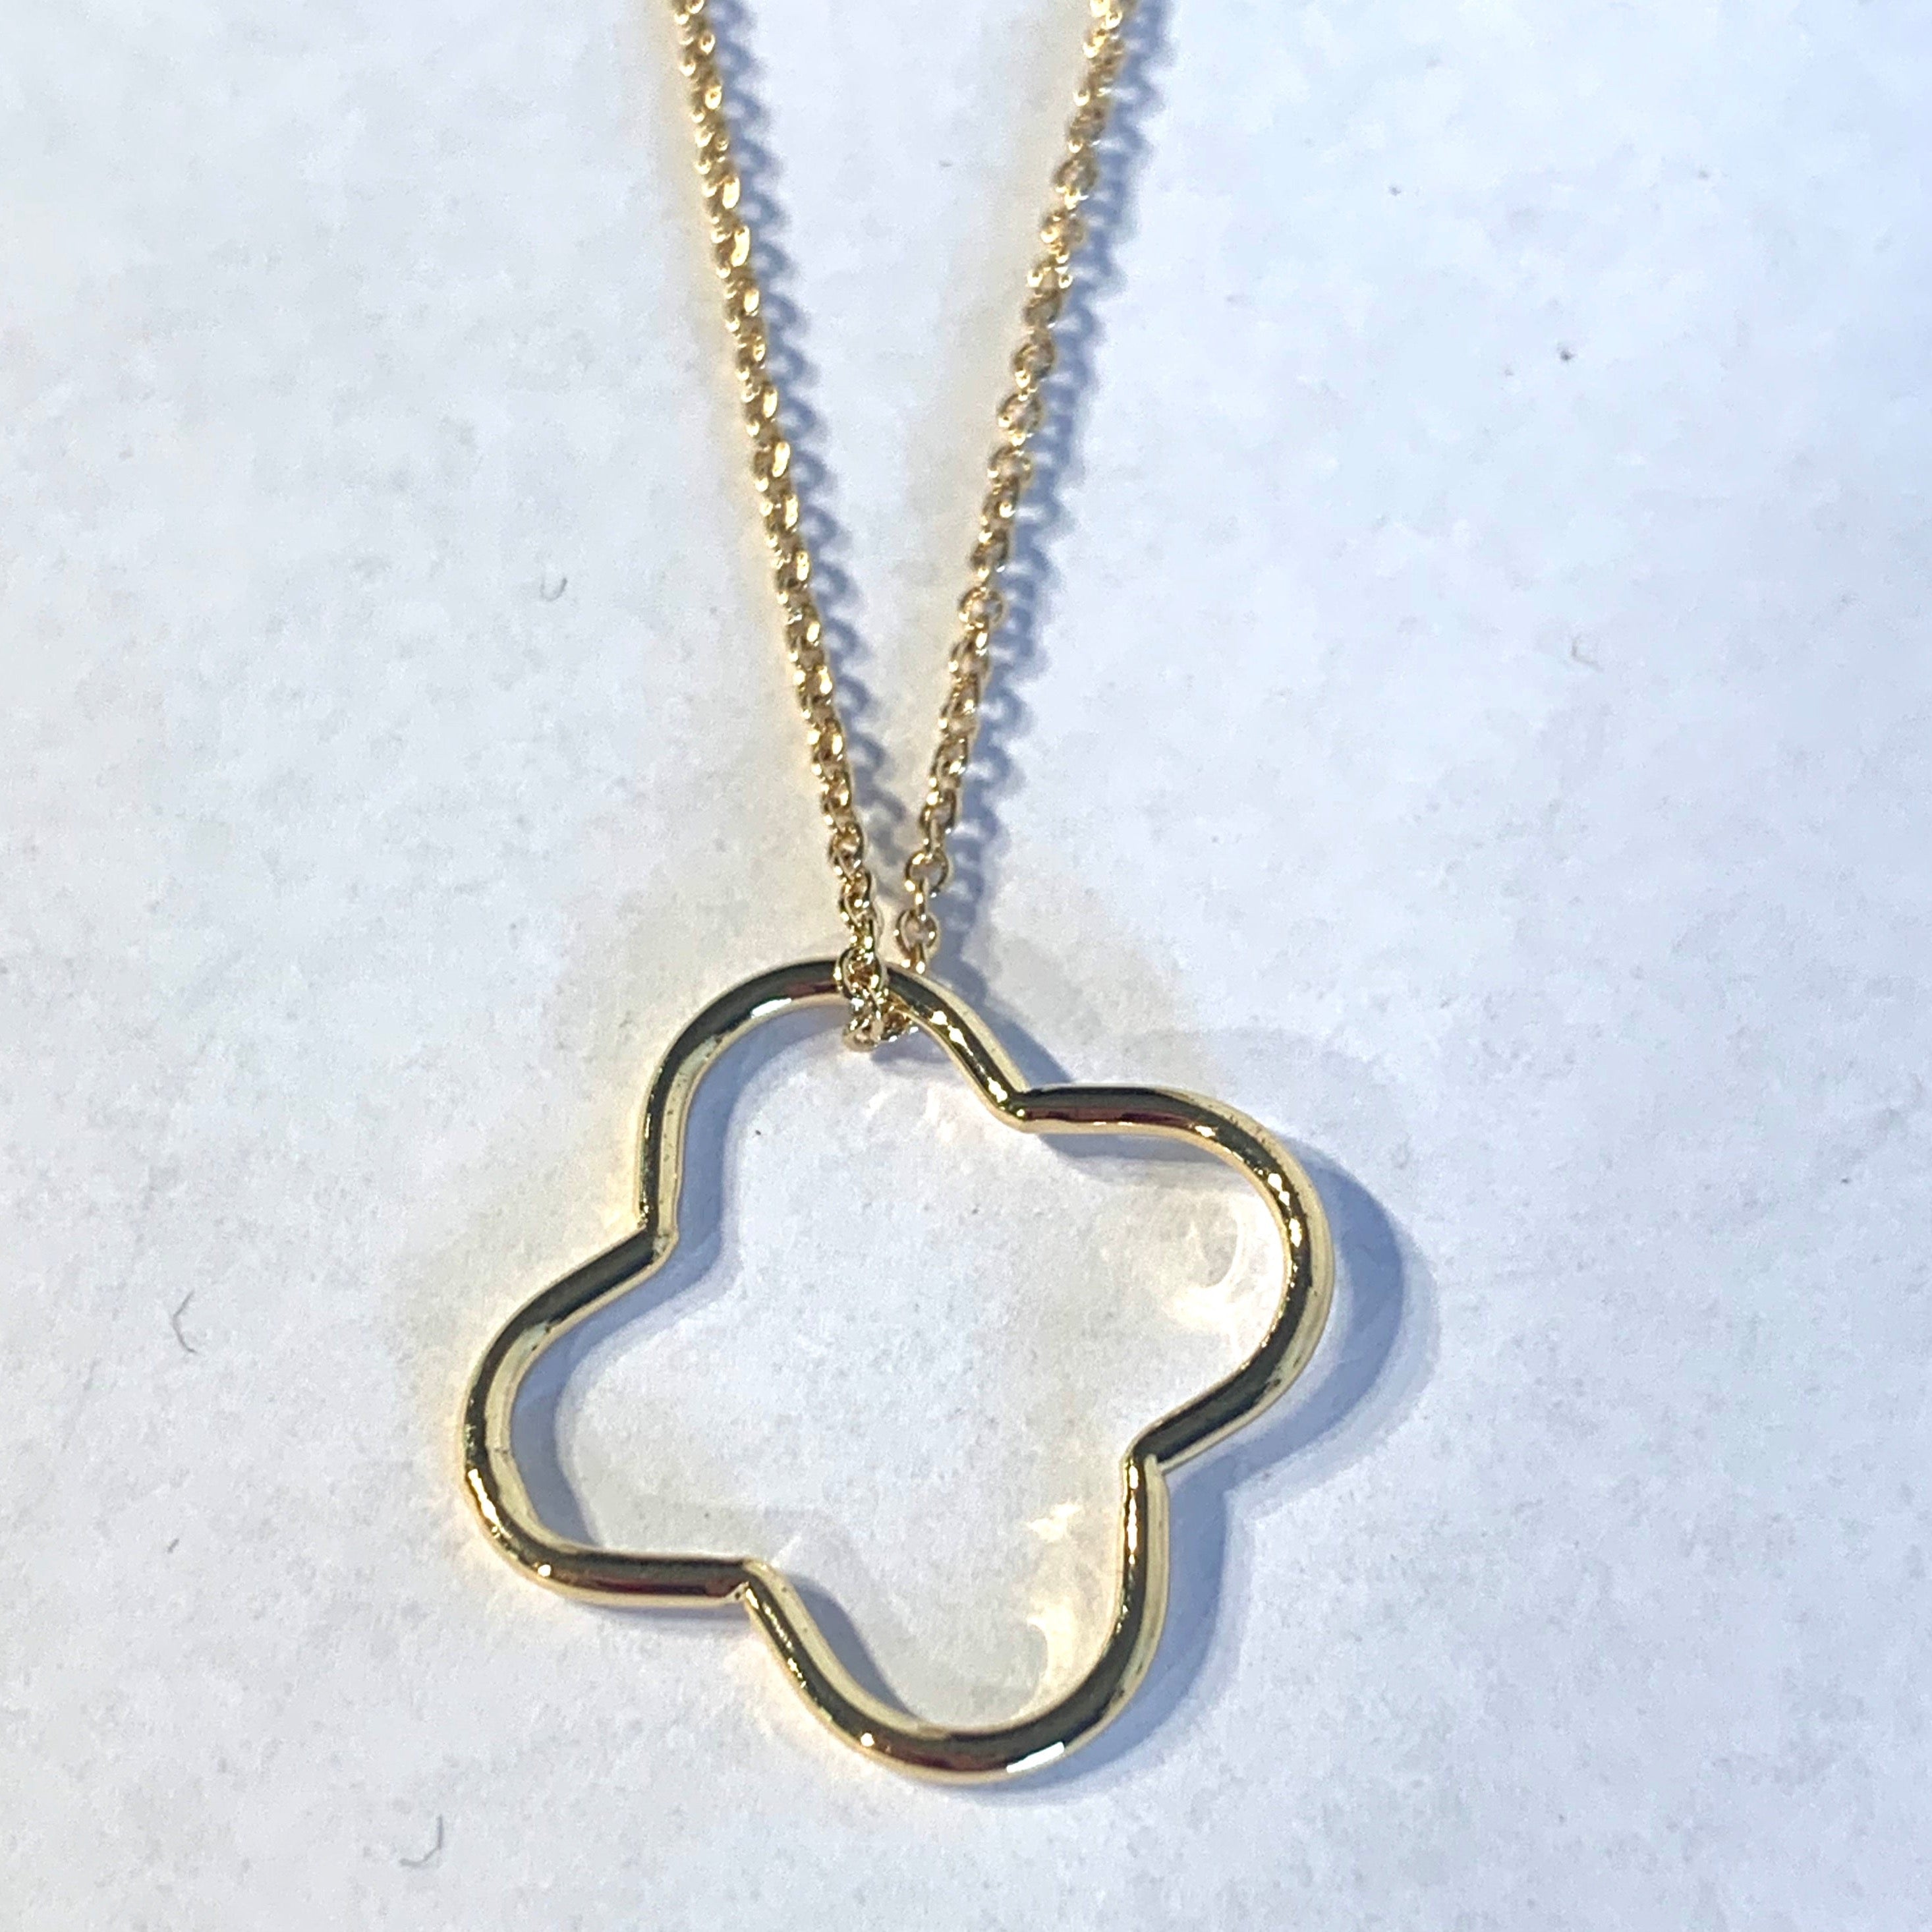 Necklace, Clover Outline - Danshire Market and Design, gold clover outline pendant necklace